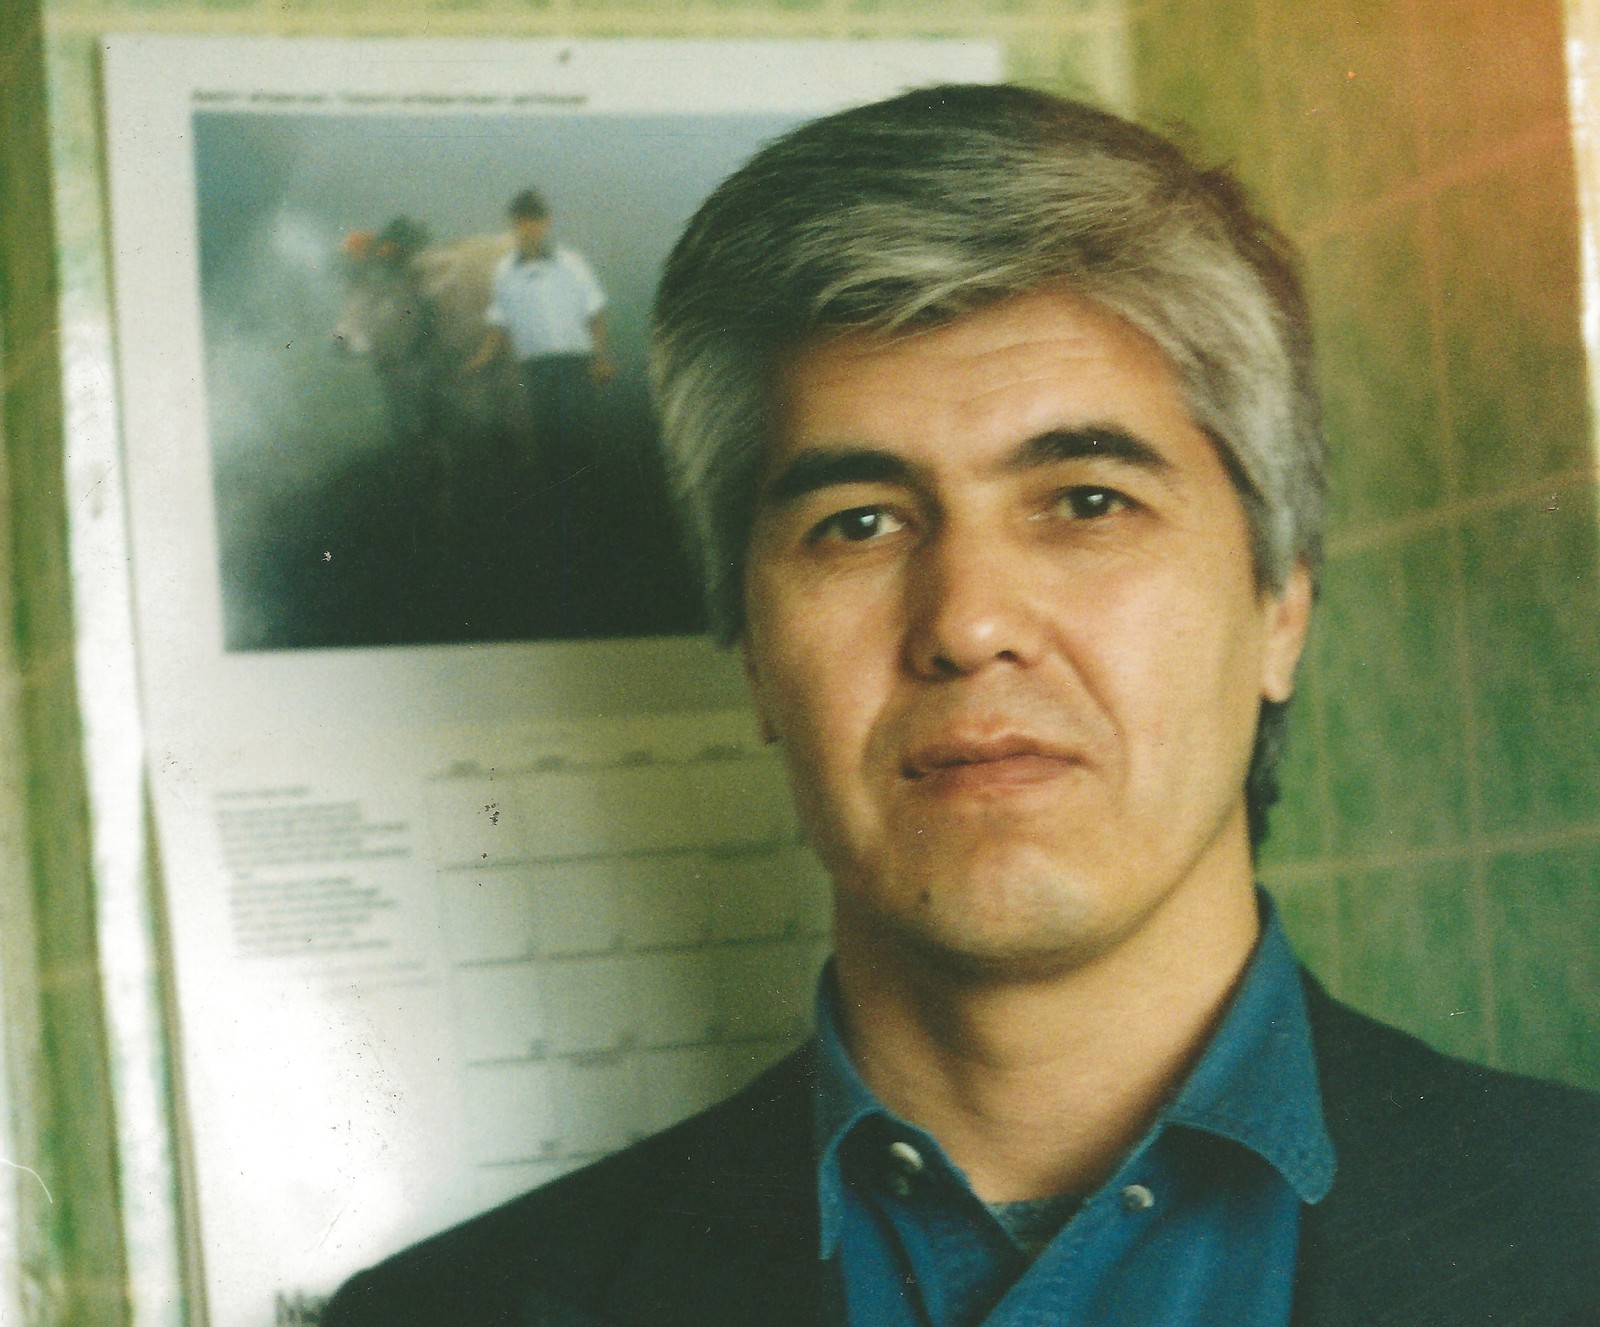 Uzbekistan: Muhammad Bekzhanov is freed after 17 years in prison